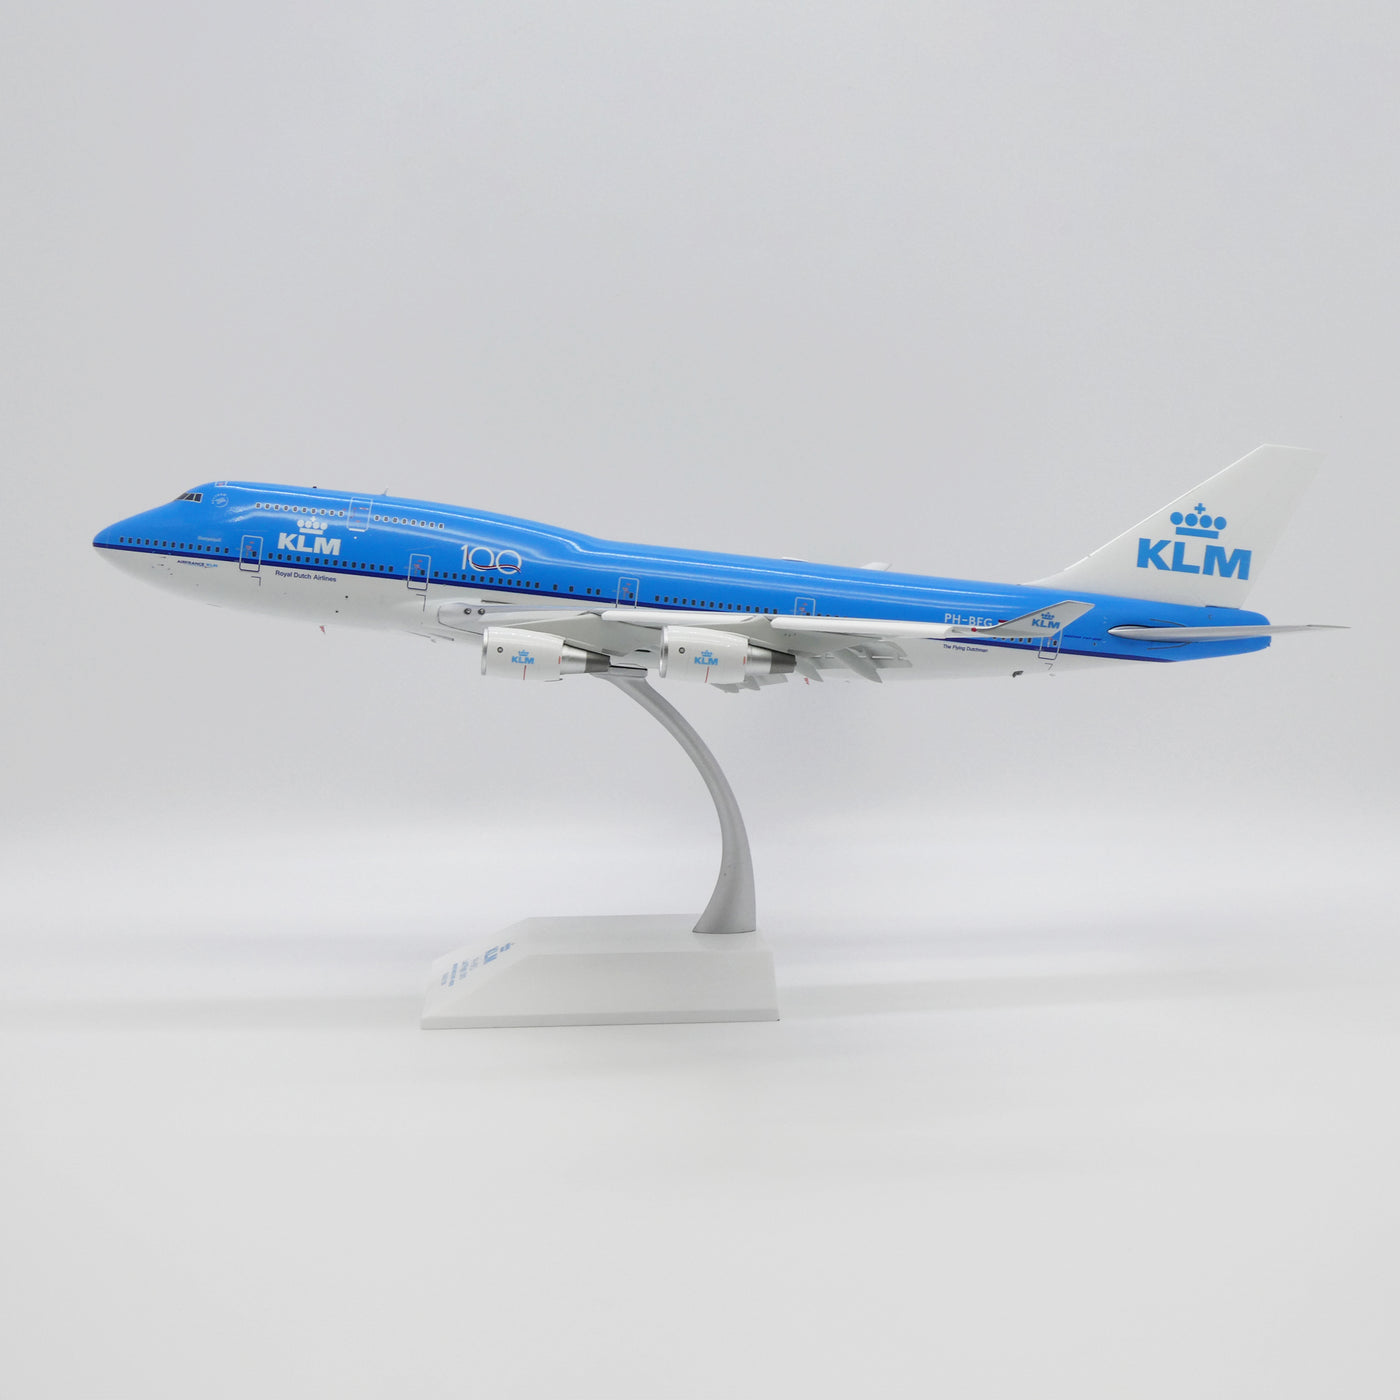 JC Wings X Aviationtag Bundle KLM "100" Boeing 747 1:200 Flaps Down